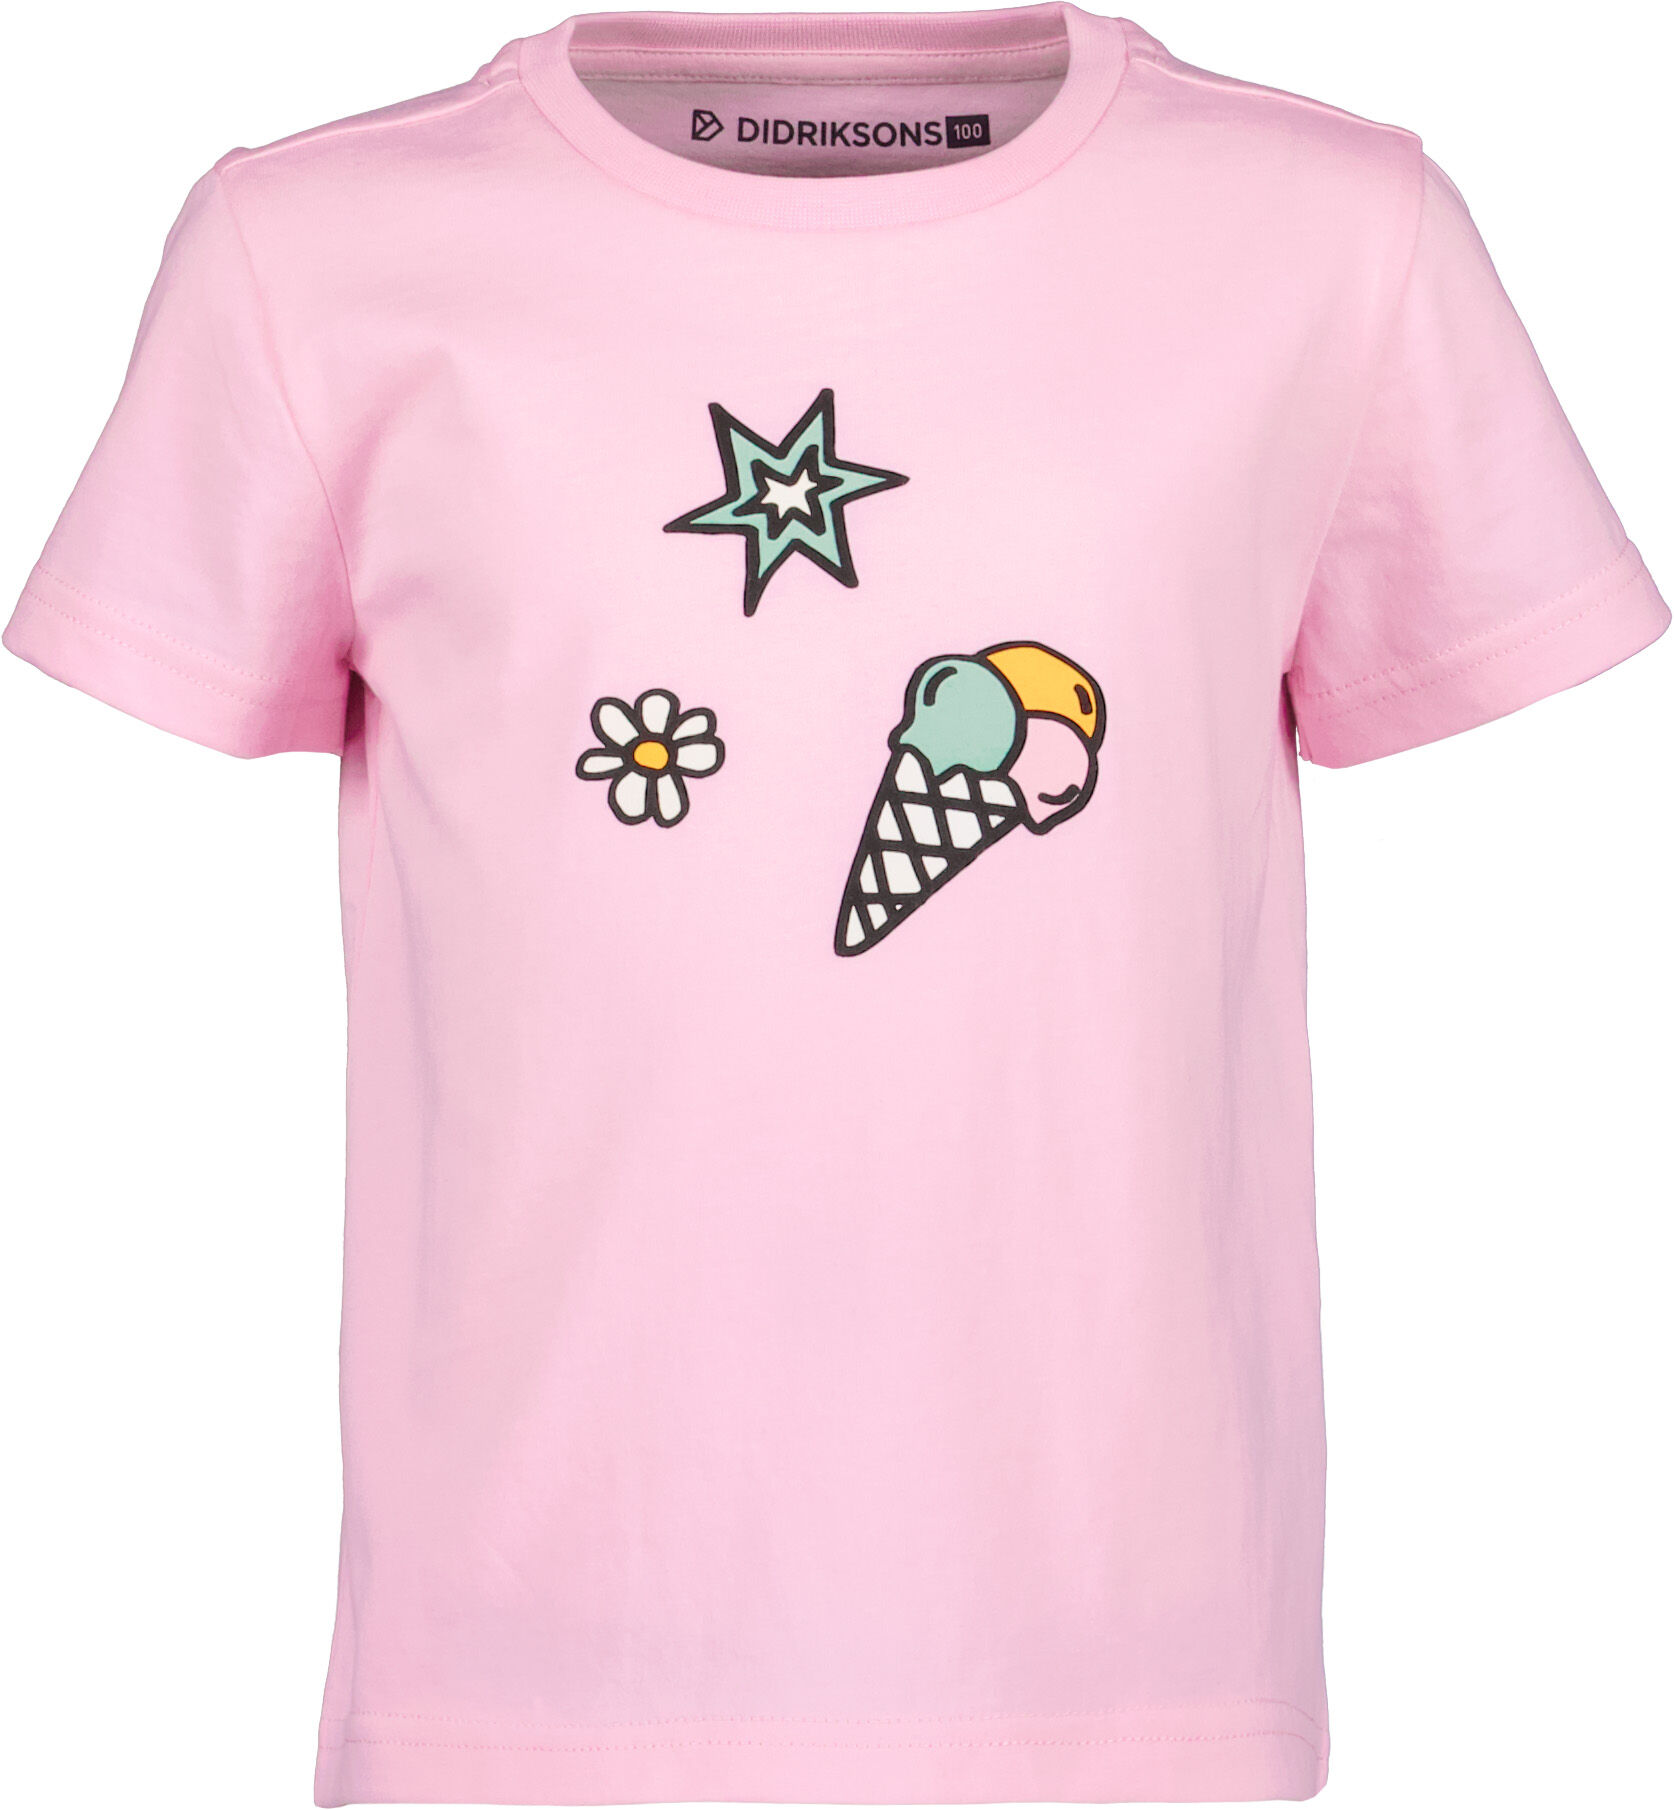 Didriksons Mynta T-shirt Orchid Pink 110